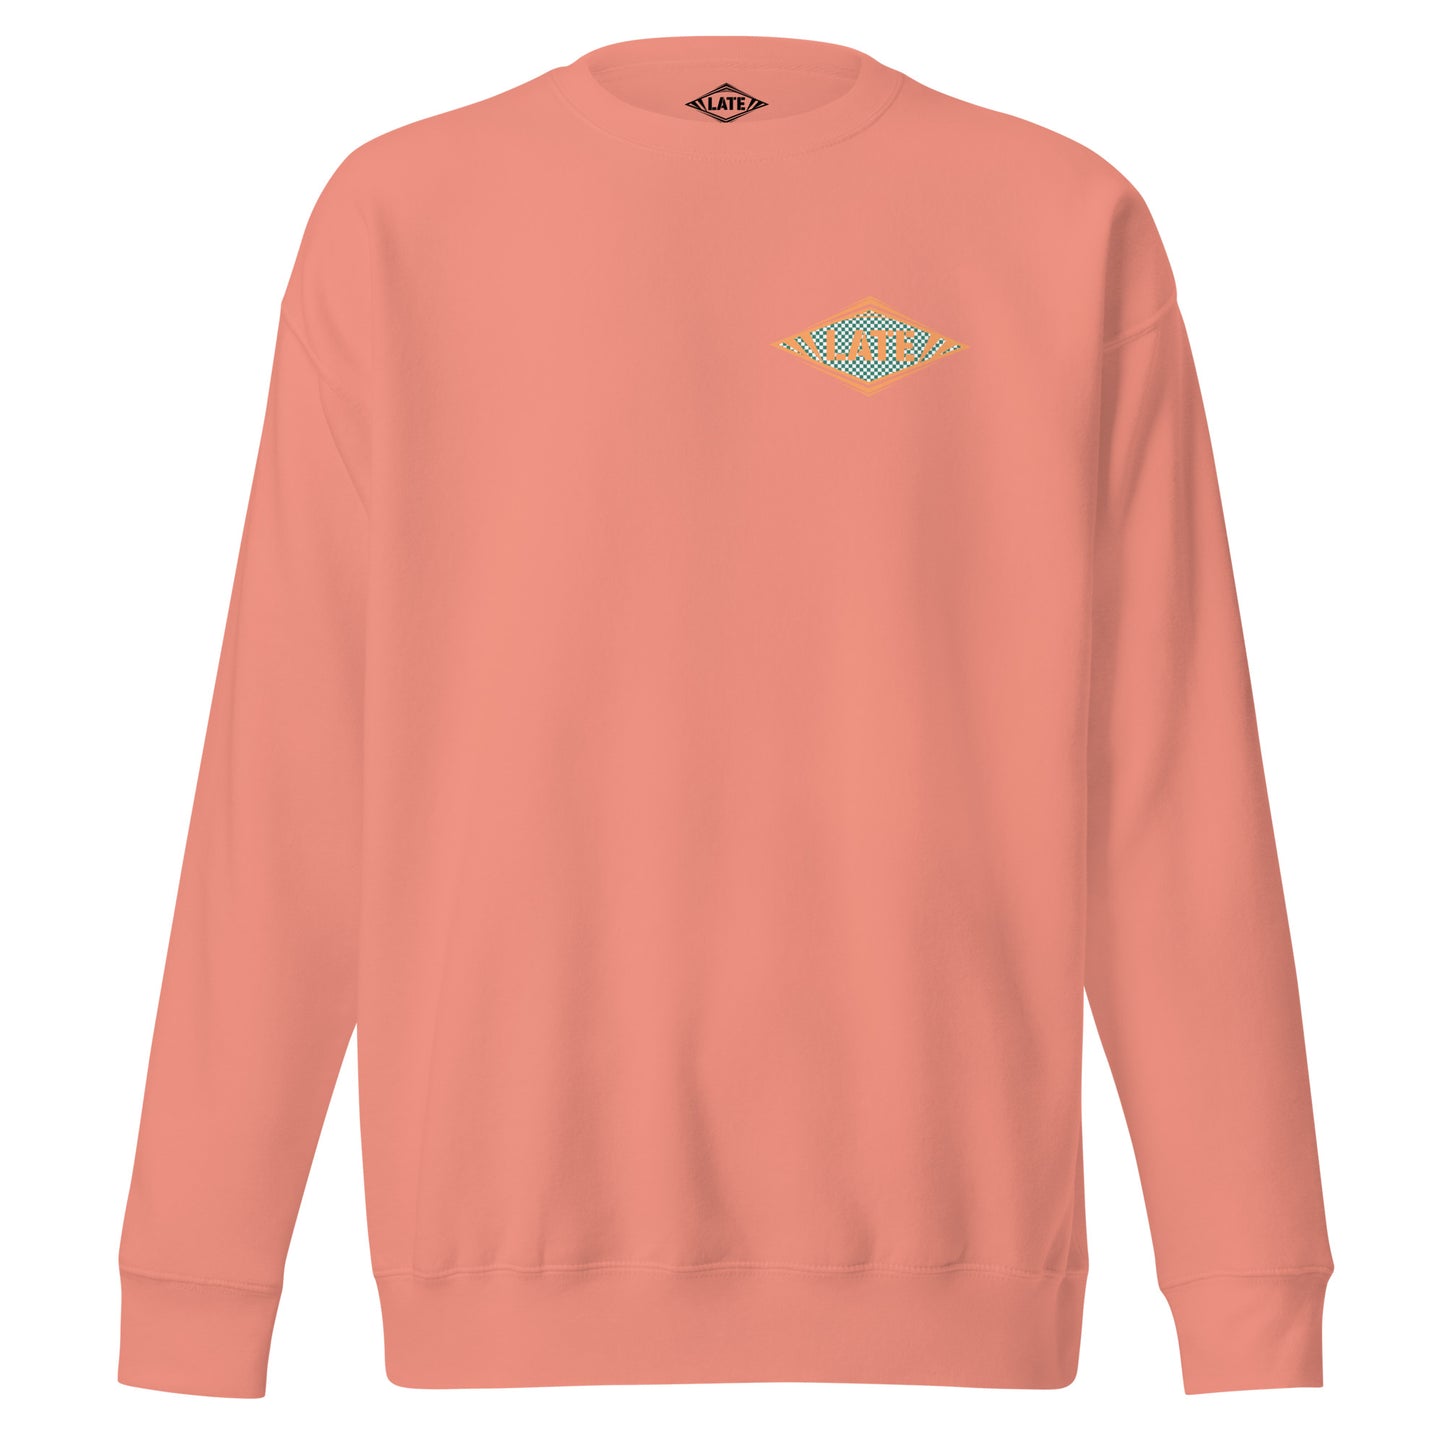 Sweatshirt Shred It logo Late à carreaux style Vans skateboarding sweat-shirt unisex couleur rose